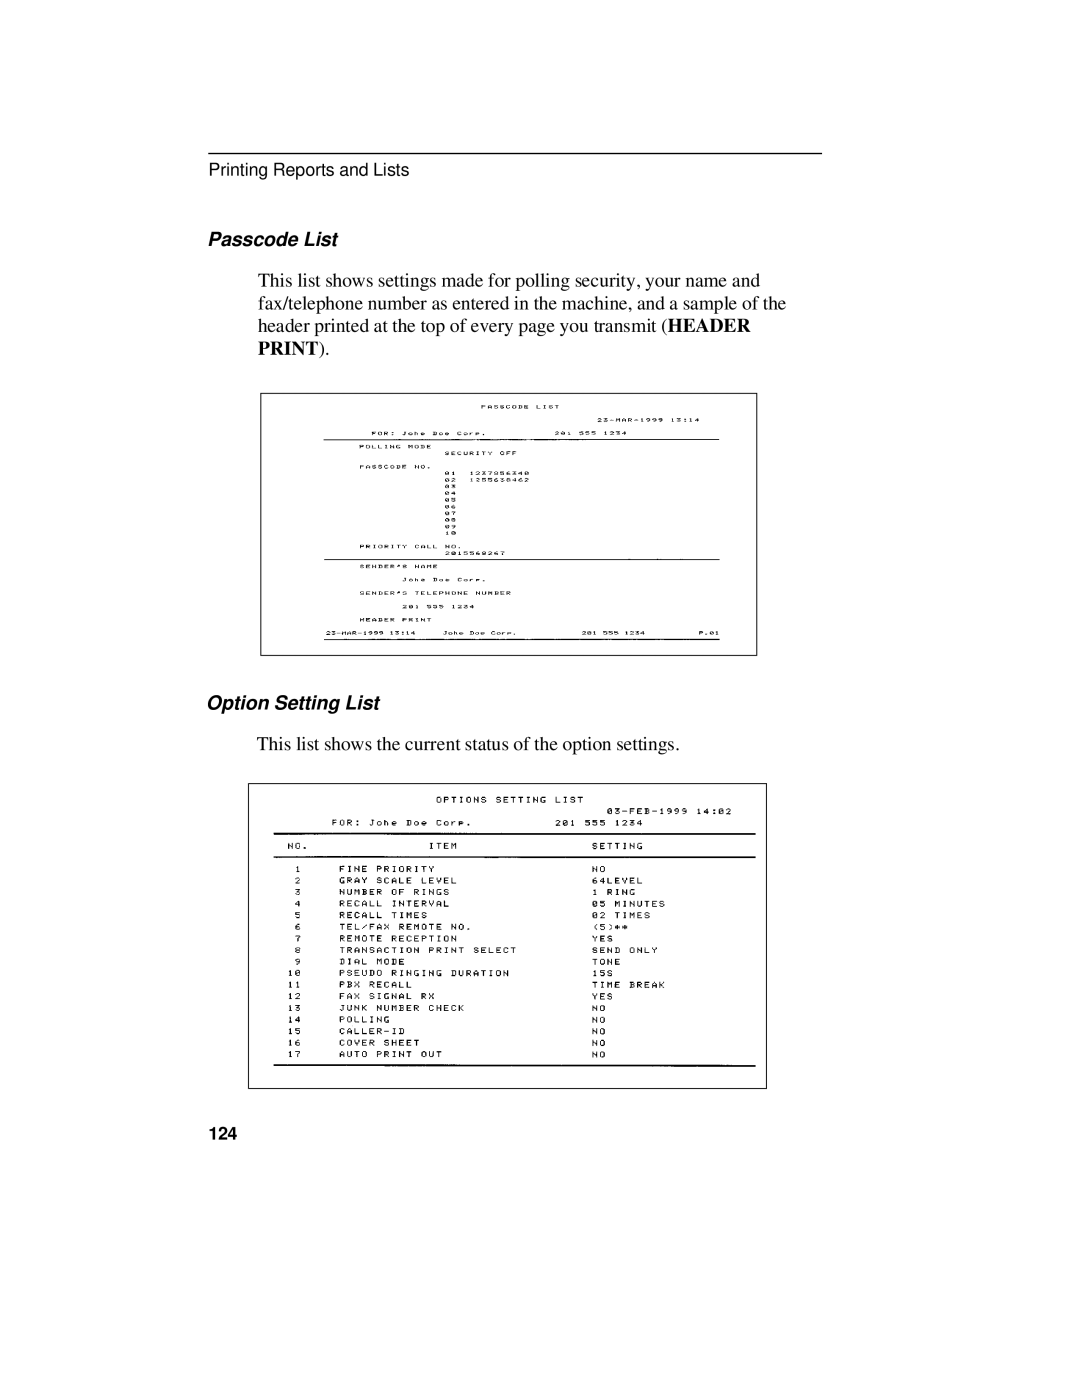 Sharp UX-470 operation manual Passcode List, Option Setting List, 124 